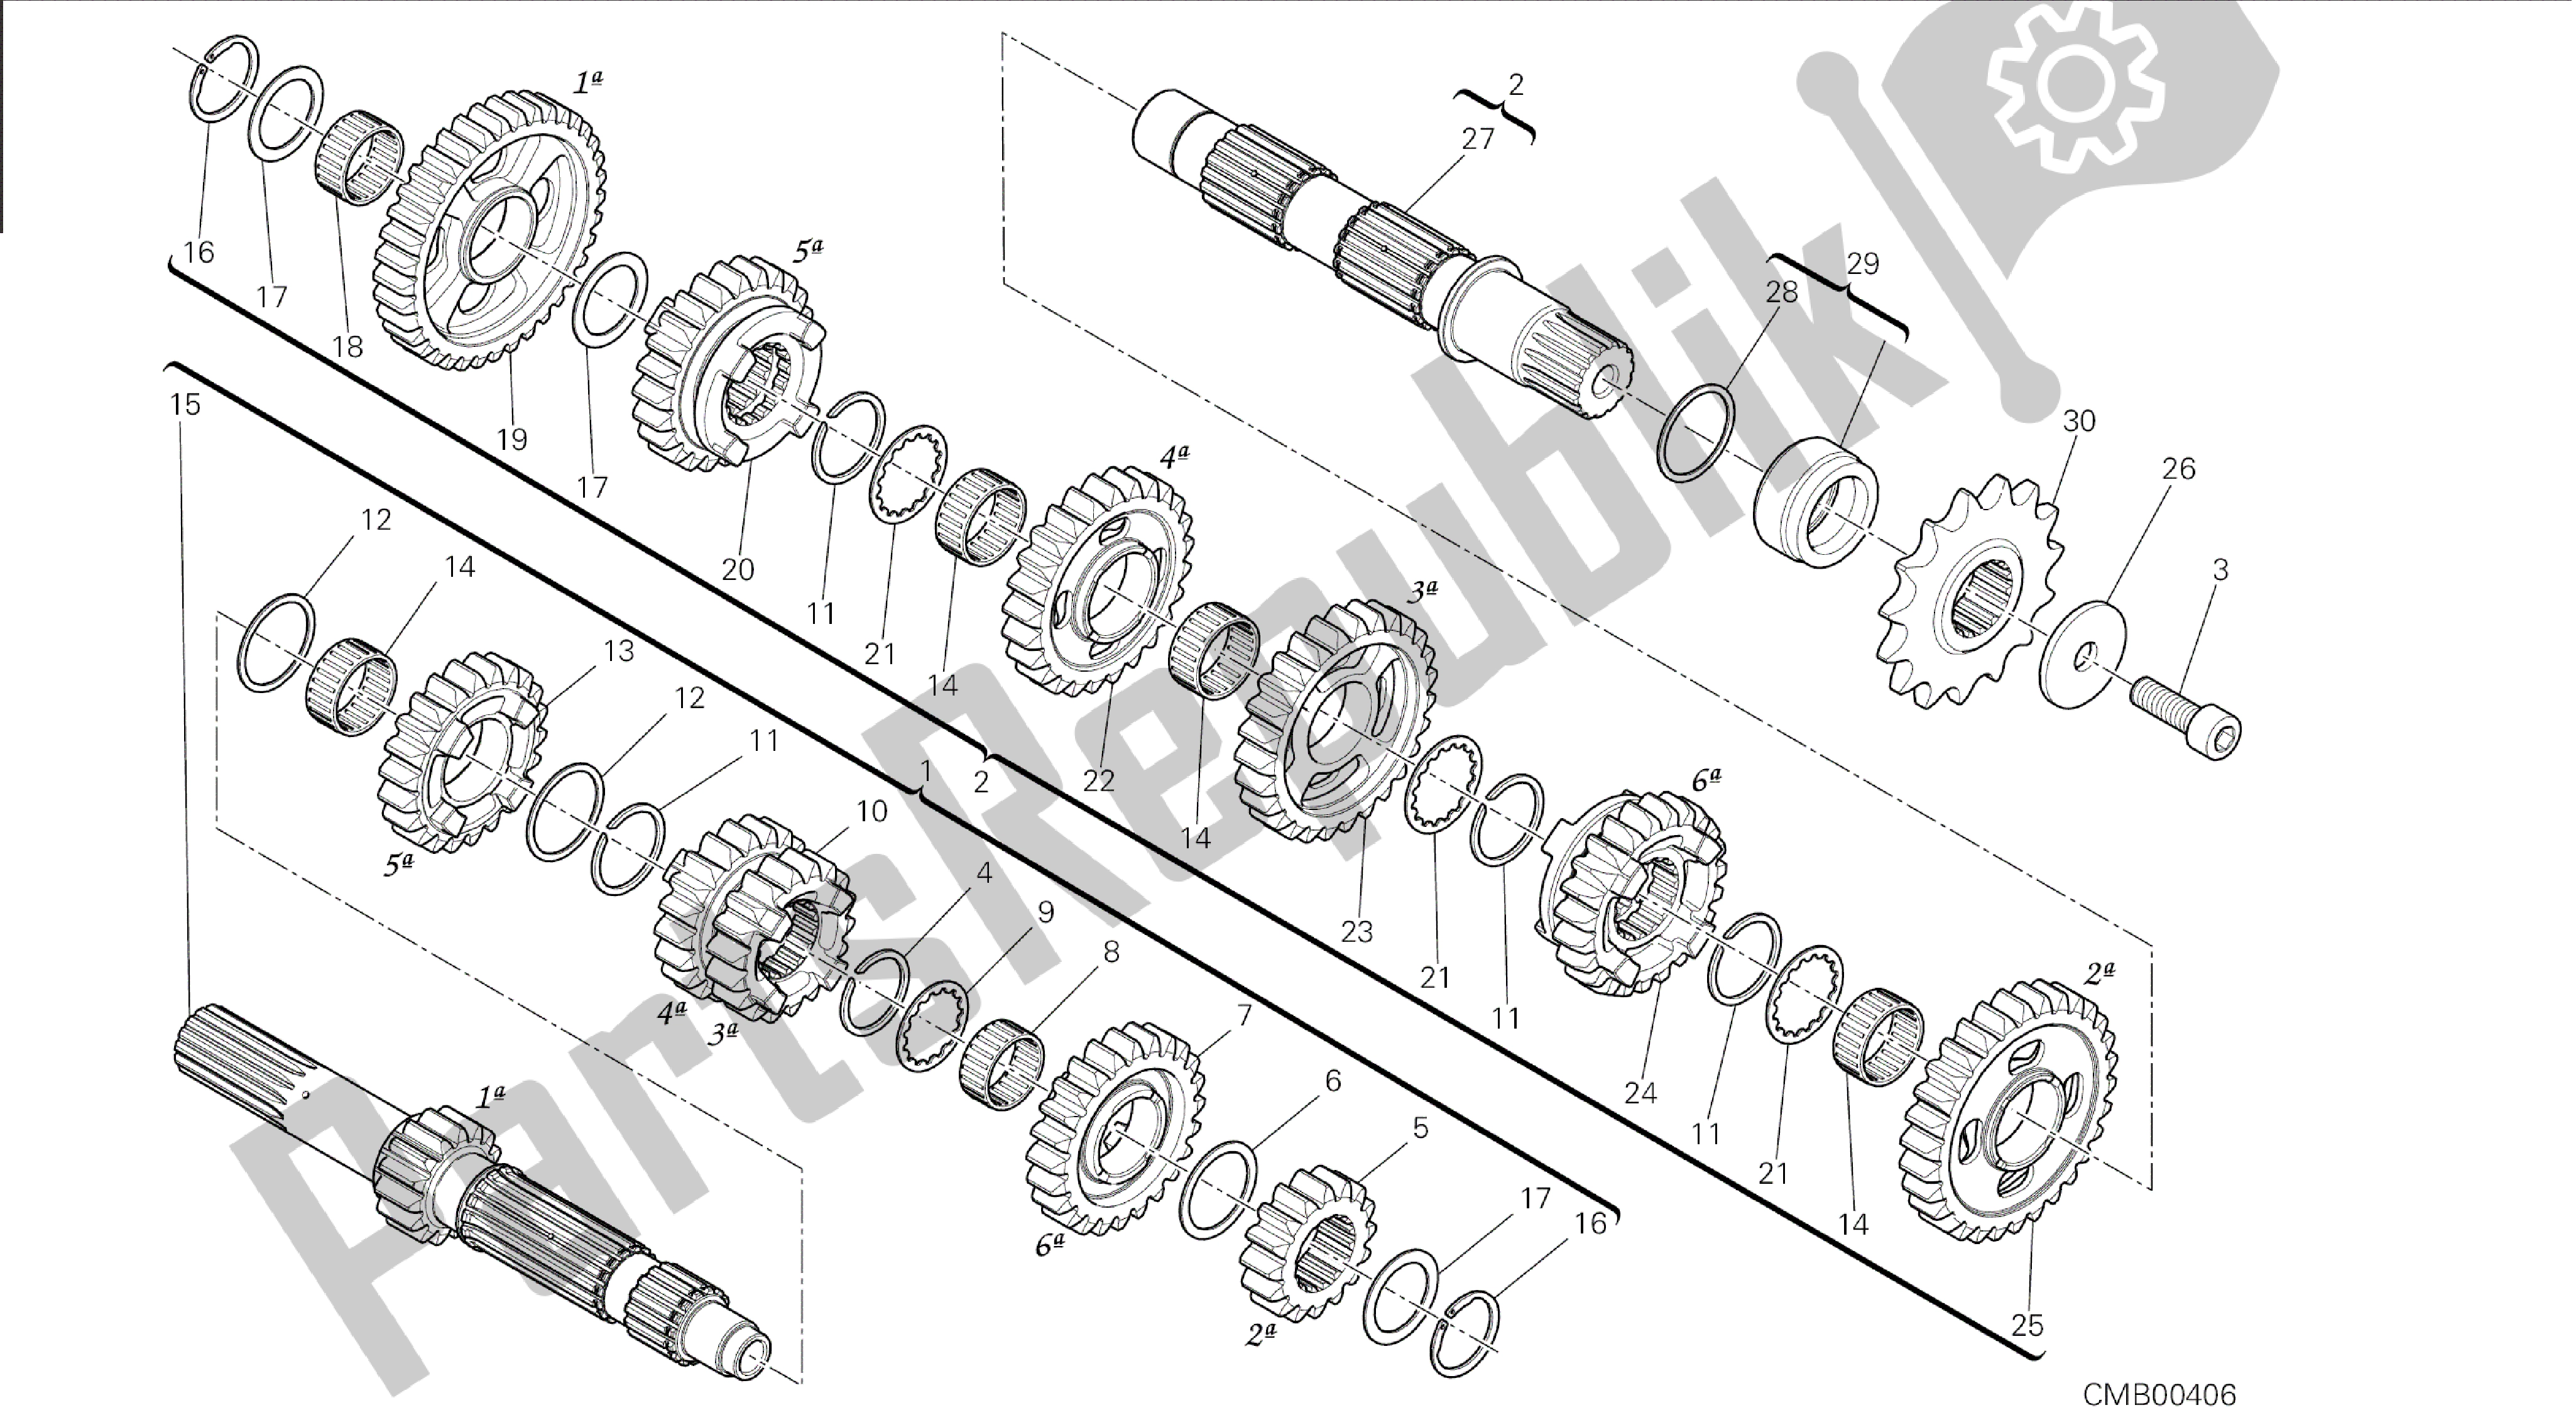 Alle onderdelen voor de Tekening 003 - Versnellingsbak [mod: 1199 R; Xst: Aus, Eur, Fra, Jap, Twn] Groepsmotor van de Ducati Panigale 1198 2015